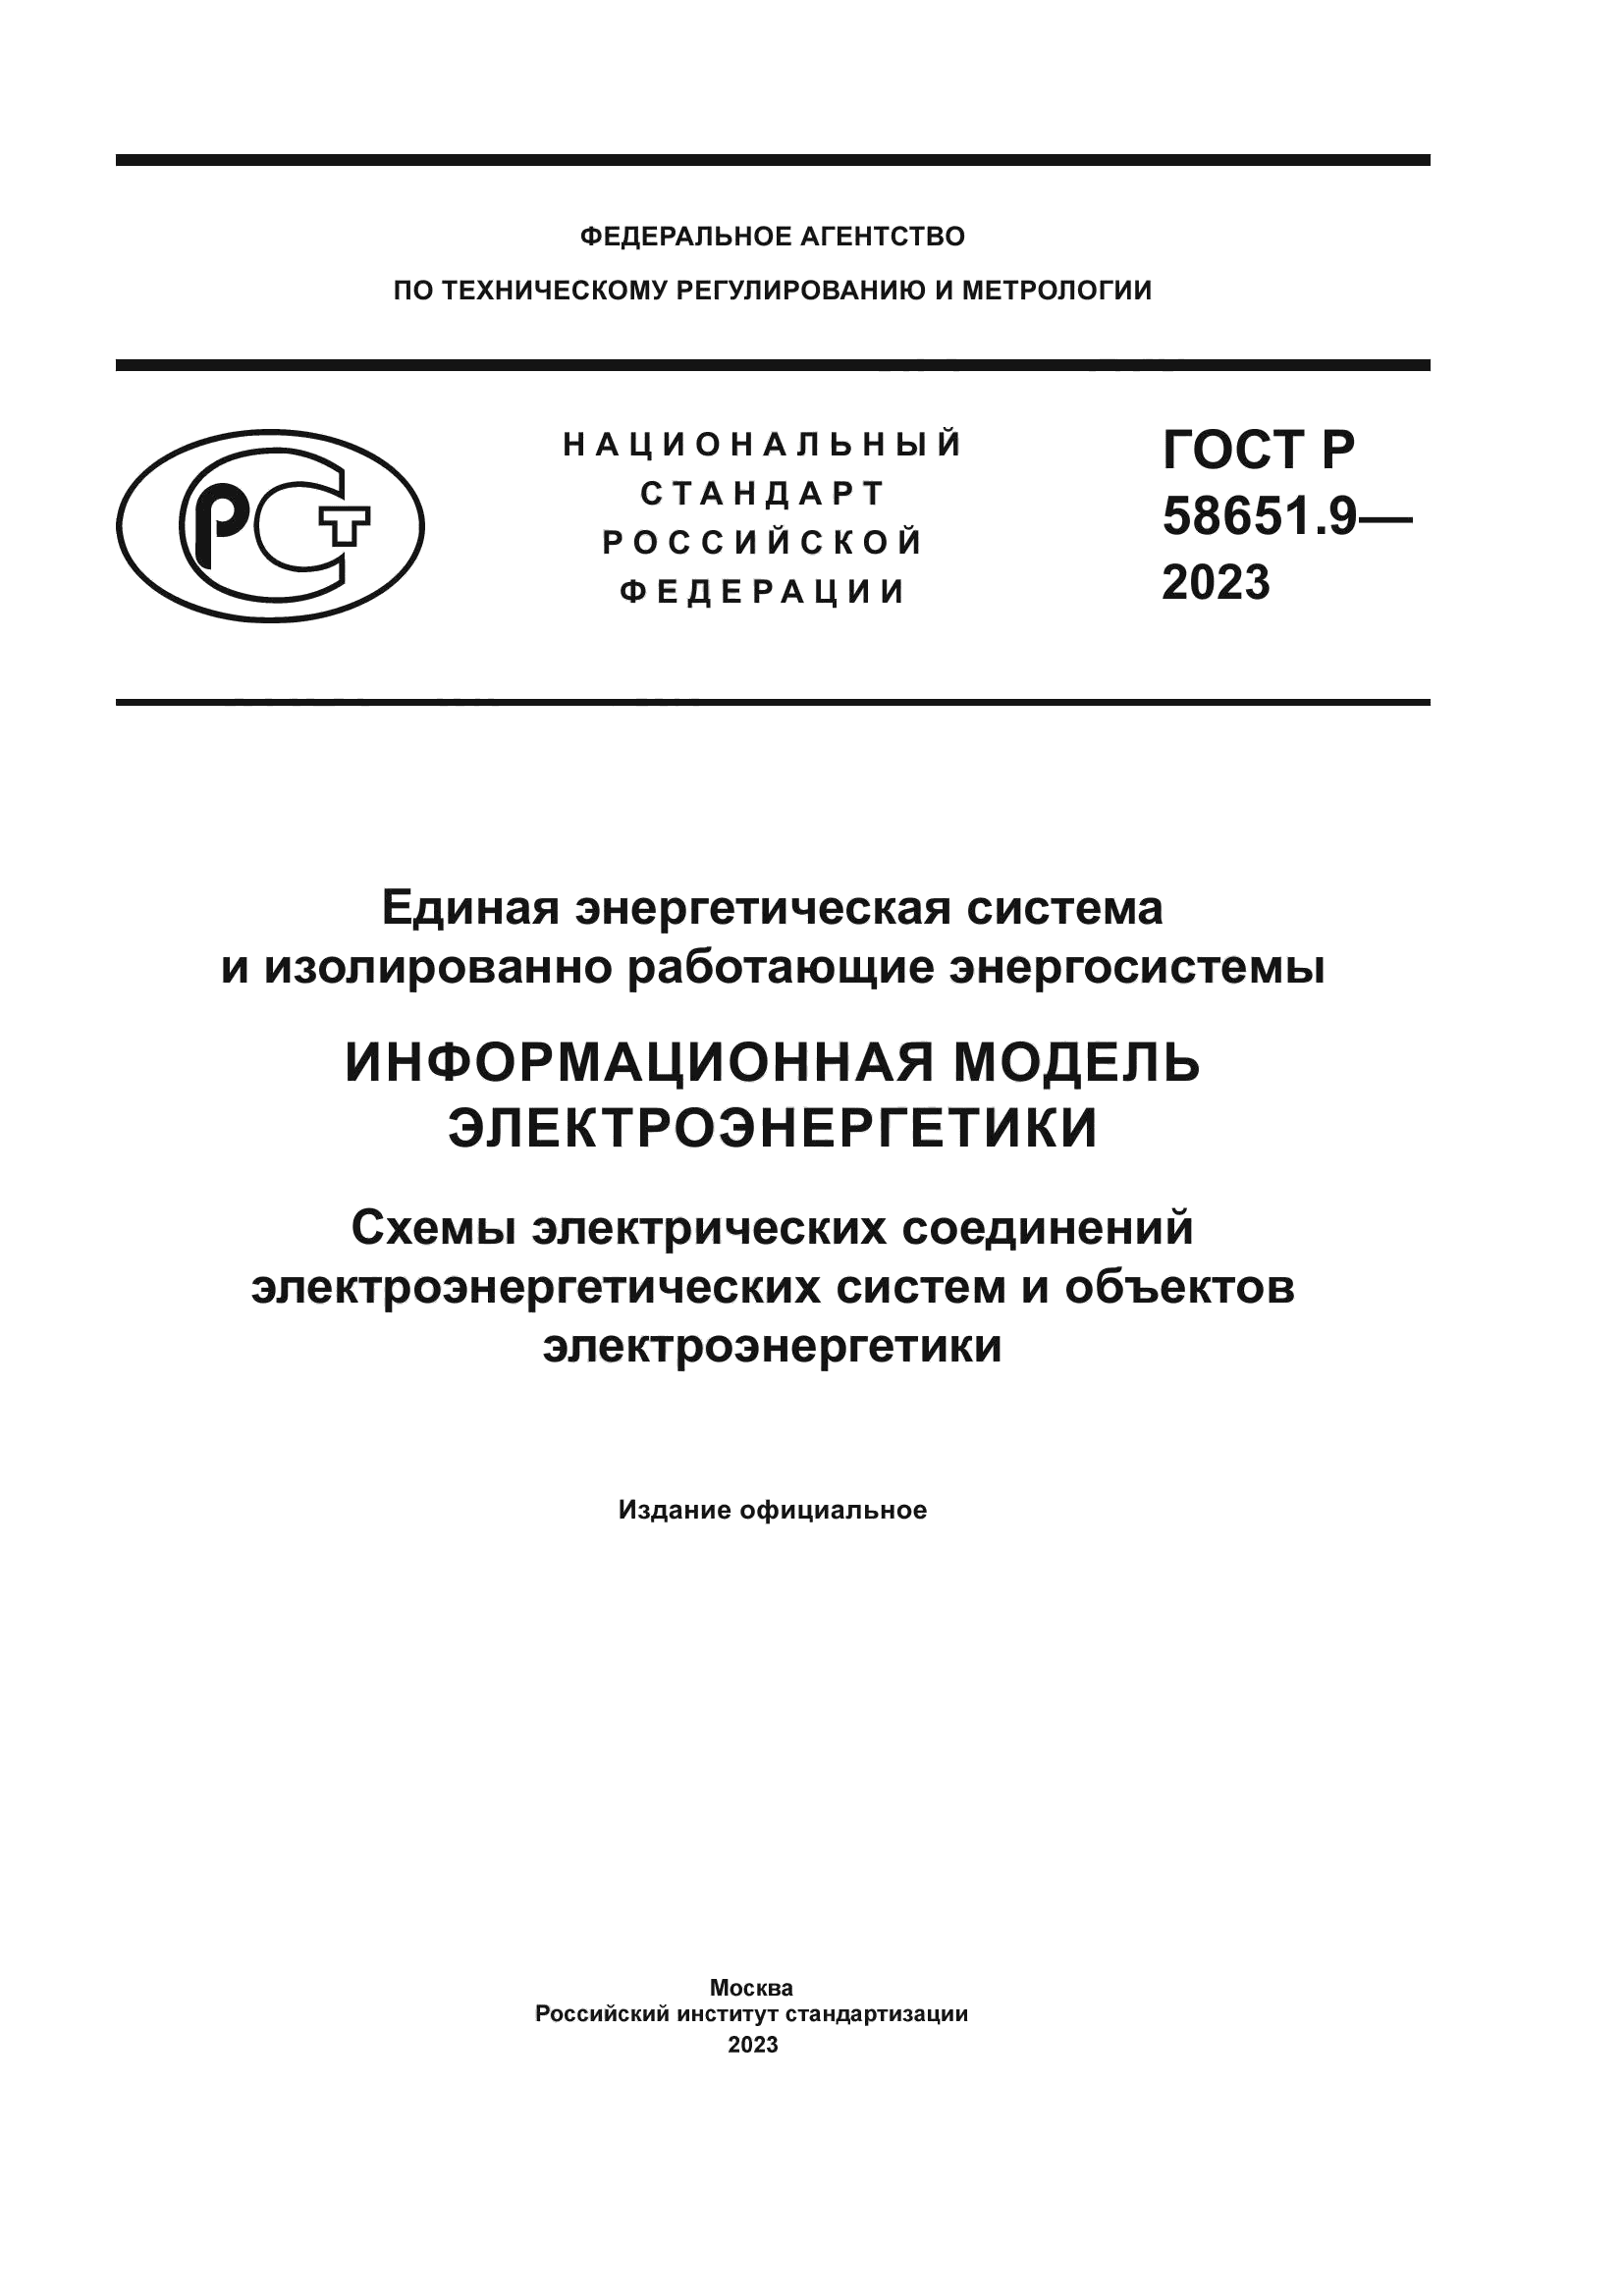 ГОСТ Р 58651.9-2023